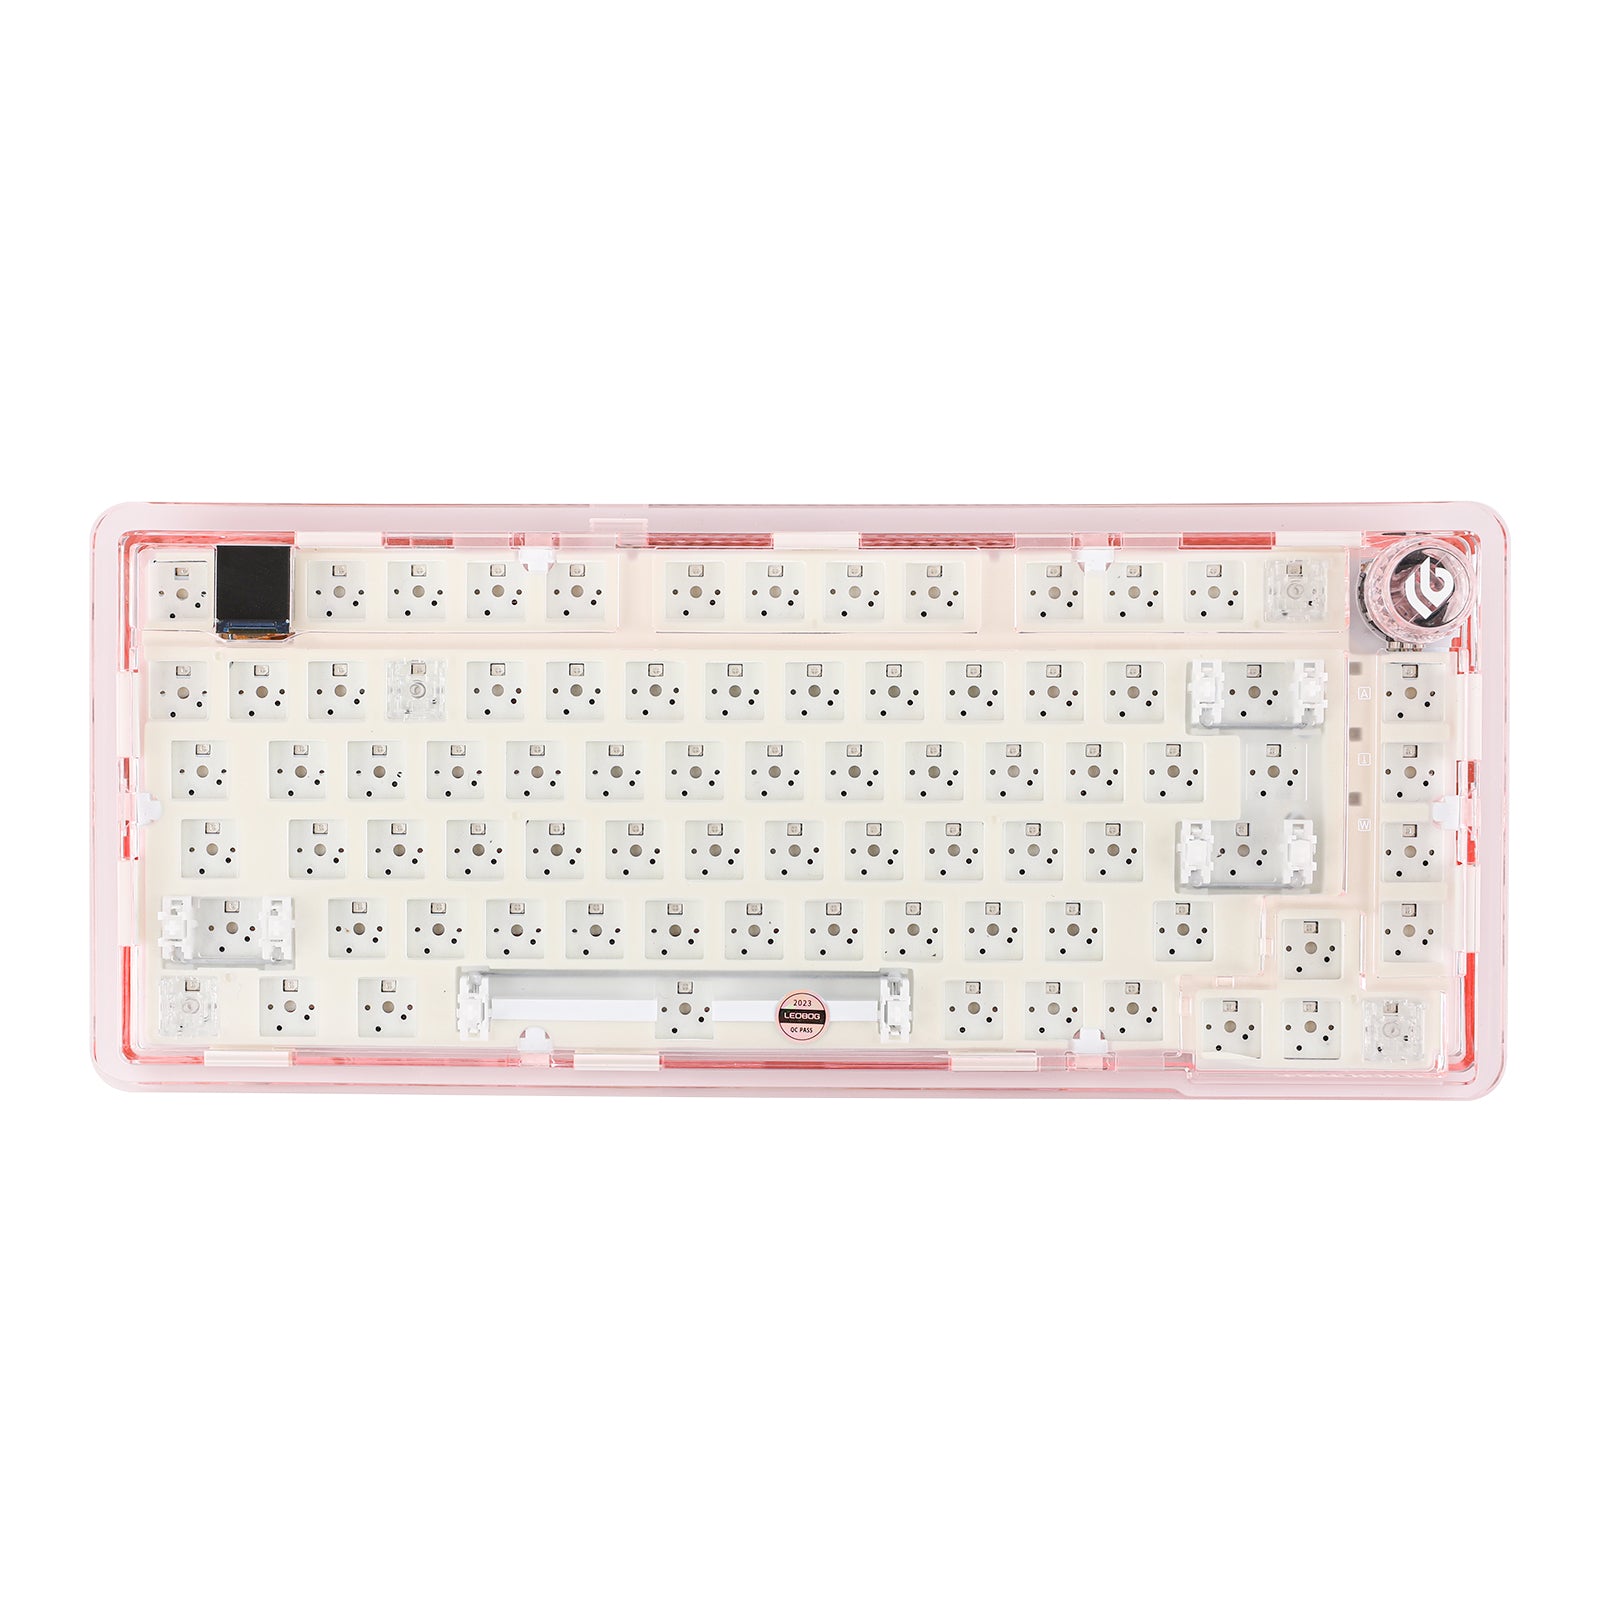 LEOBOG K81 Pro 75% Wireless Mechanical Keyboard Kit with LCD Display